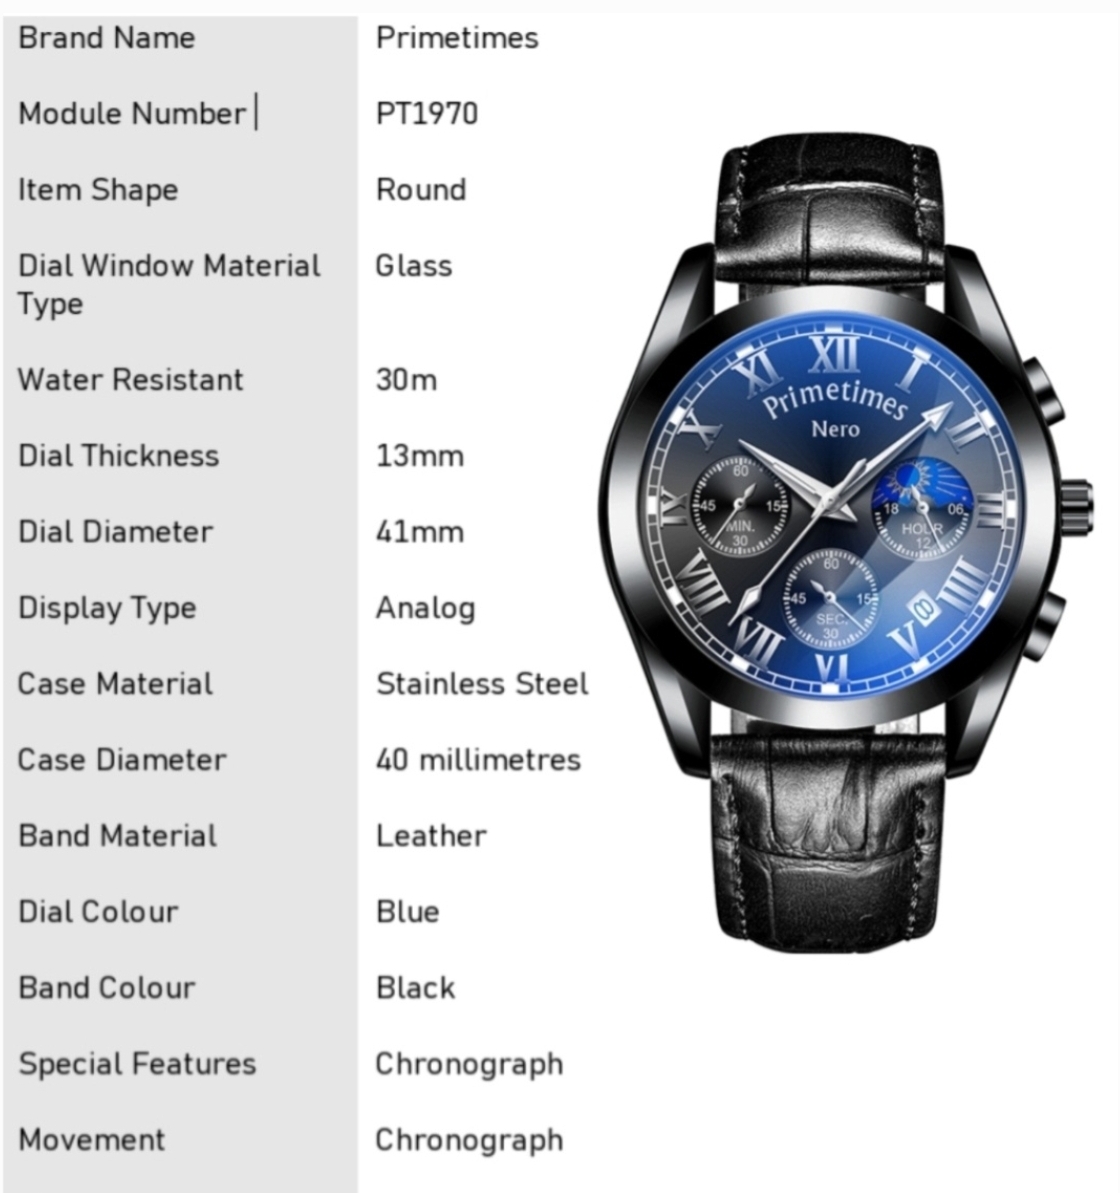 NERO: Primetimes premium luxury dress watch